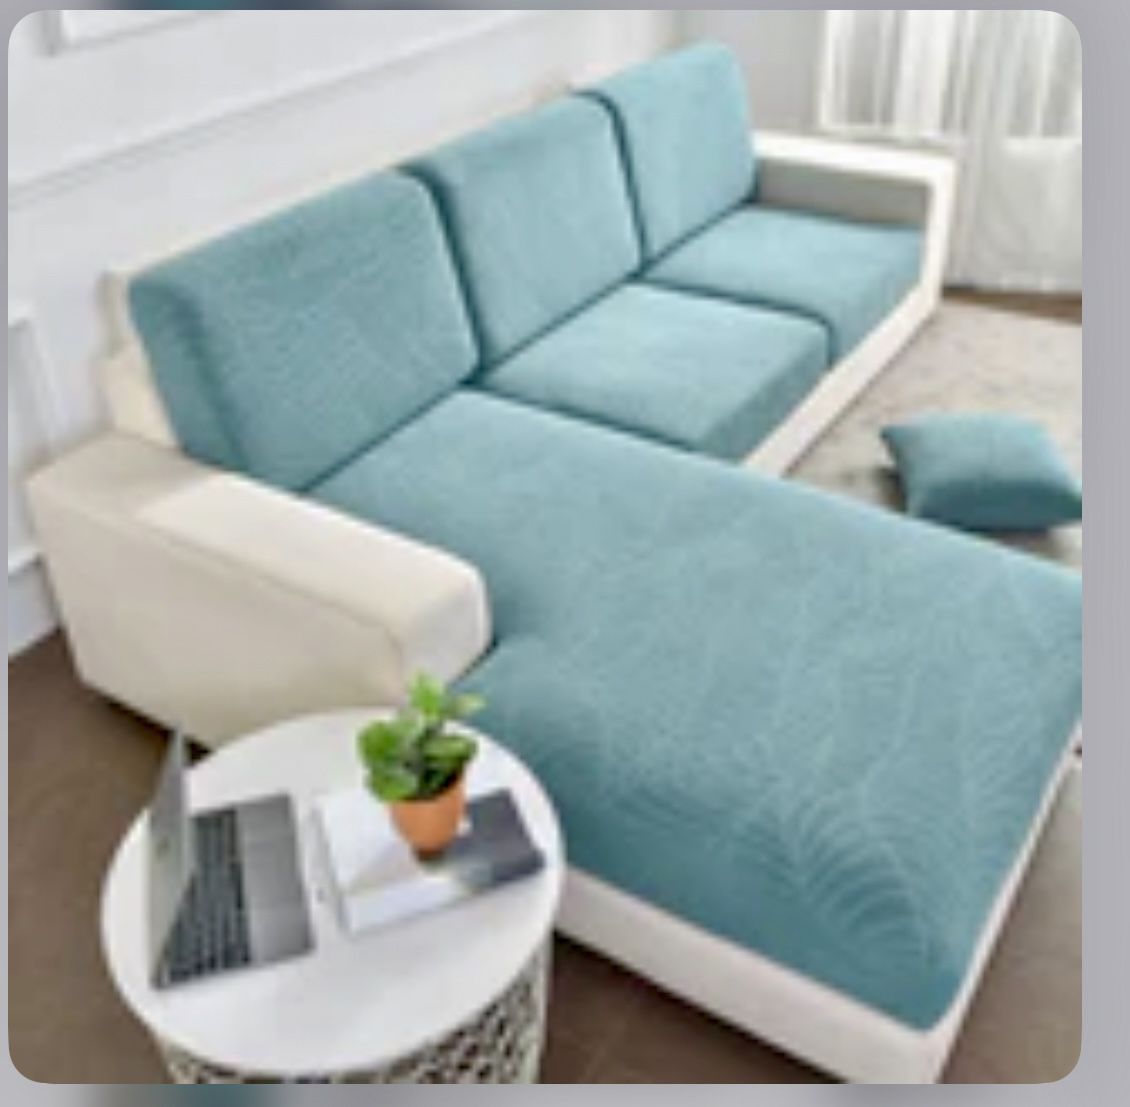 Sofa & Loveseat Cushion Covers X 5 Aqua Leaf Patterns By SofaGuards 